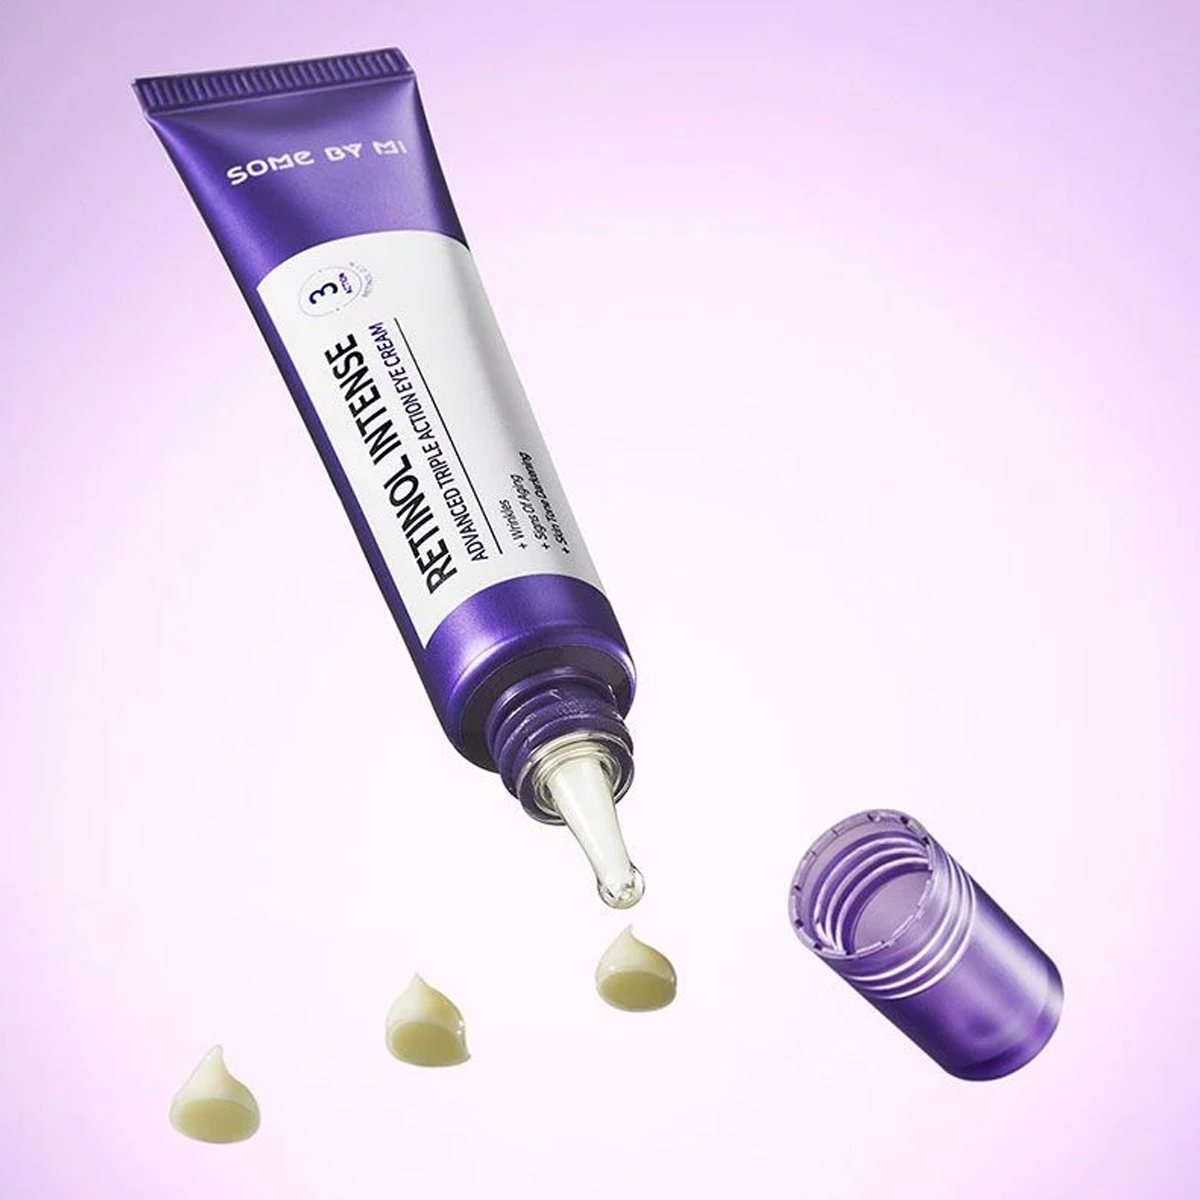 SOME BY MI - Retinol Intense Advanced Triple Action Eye Cream [30ml] - Korean Cosmetic - Eye protection